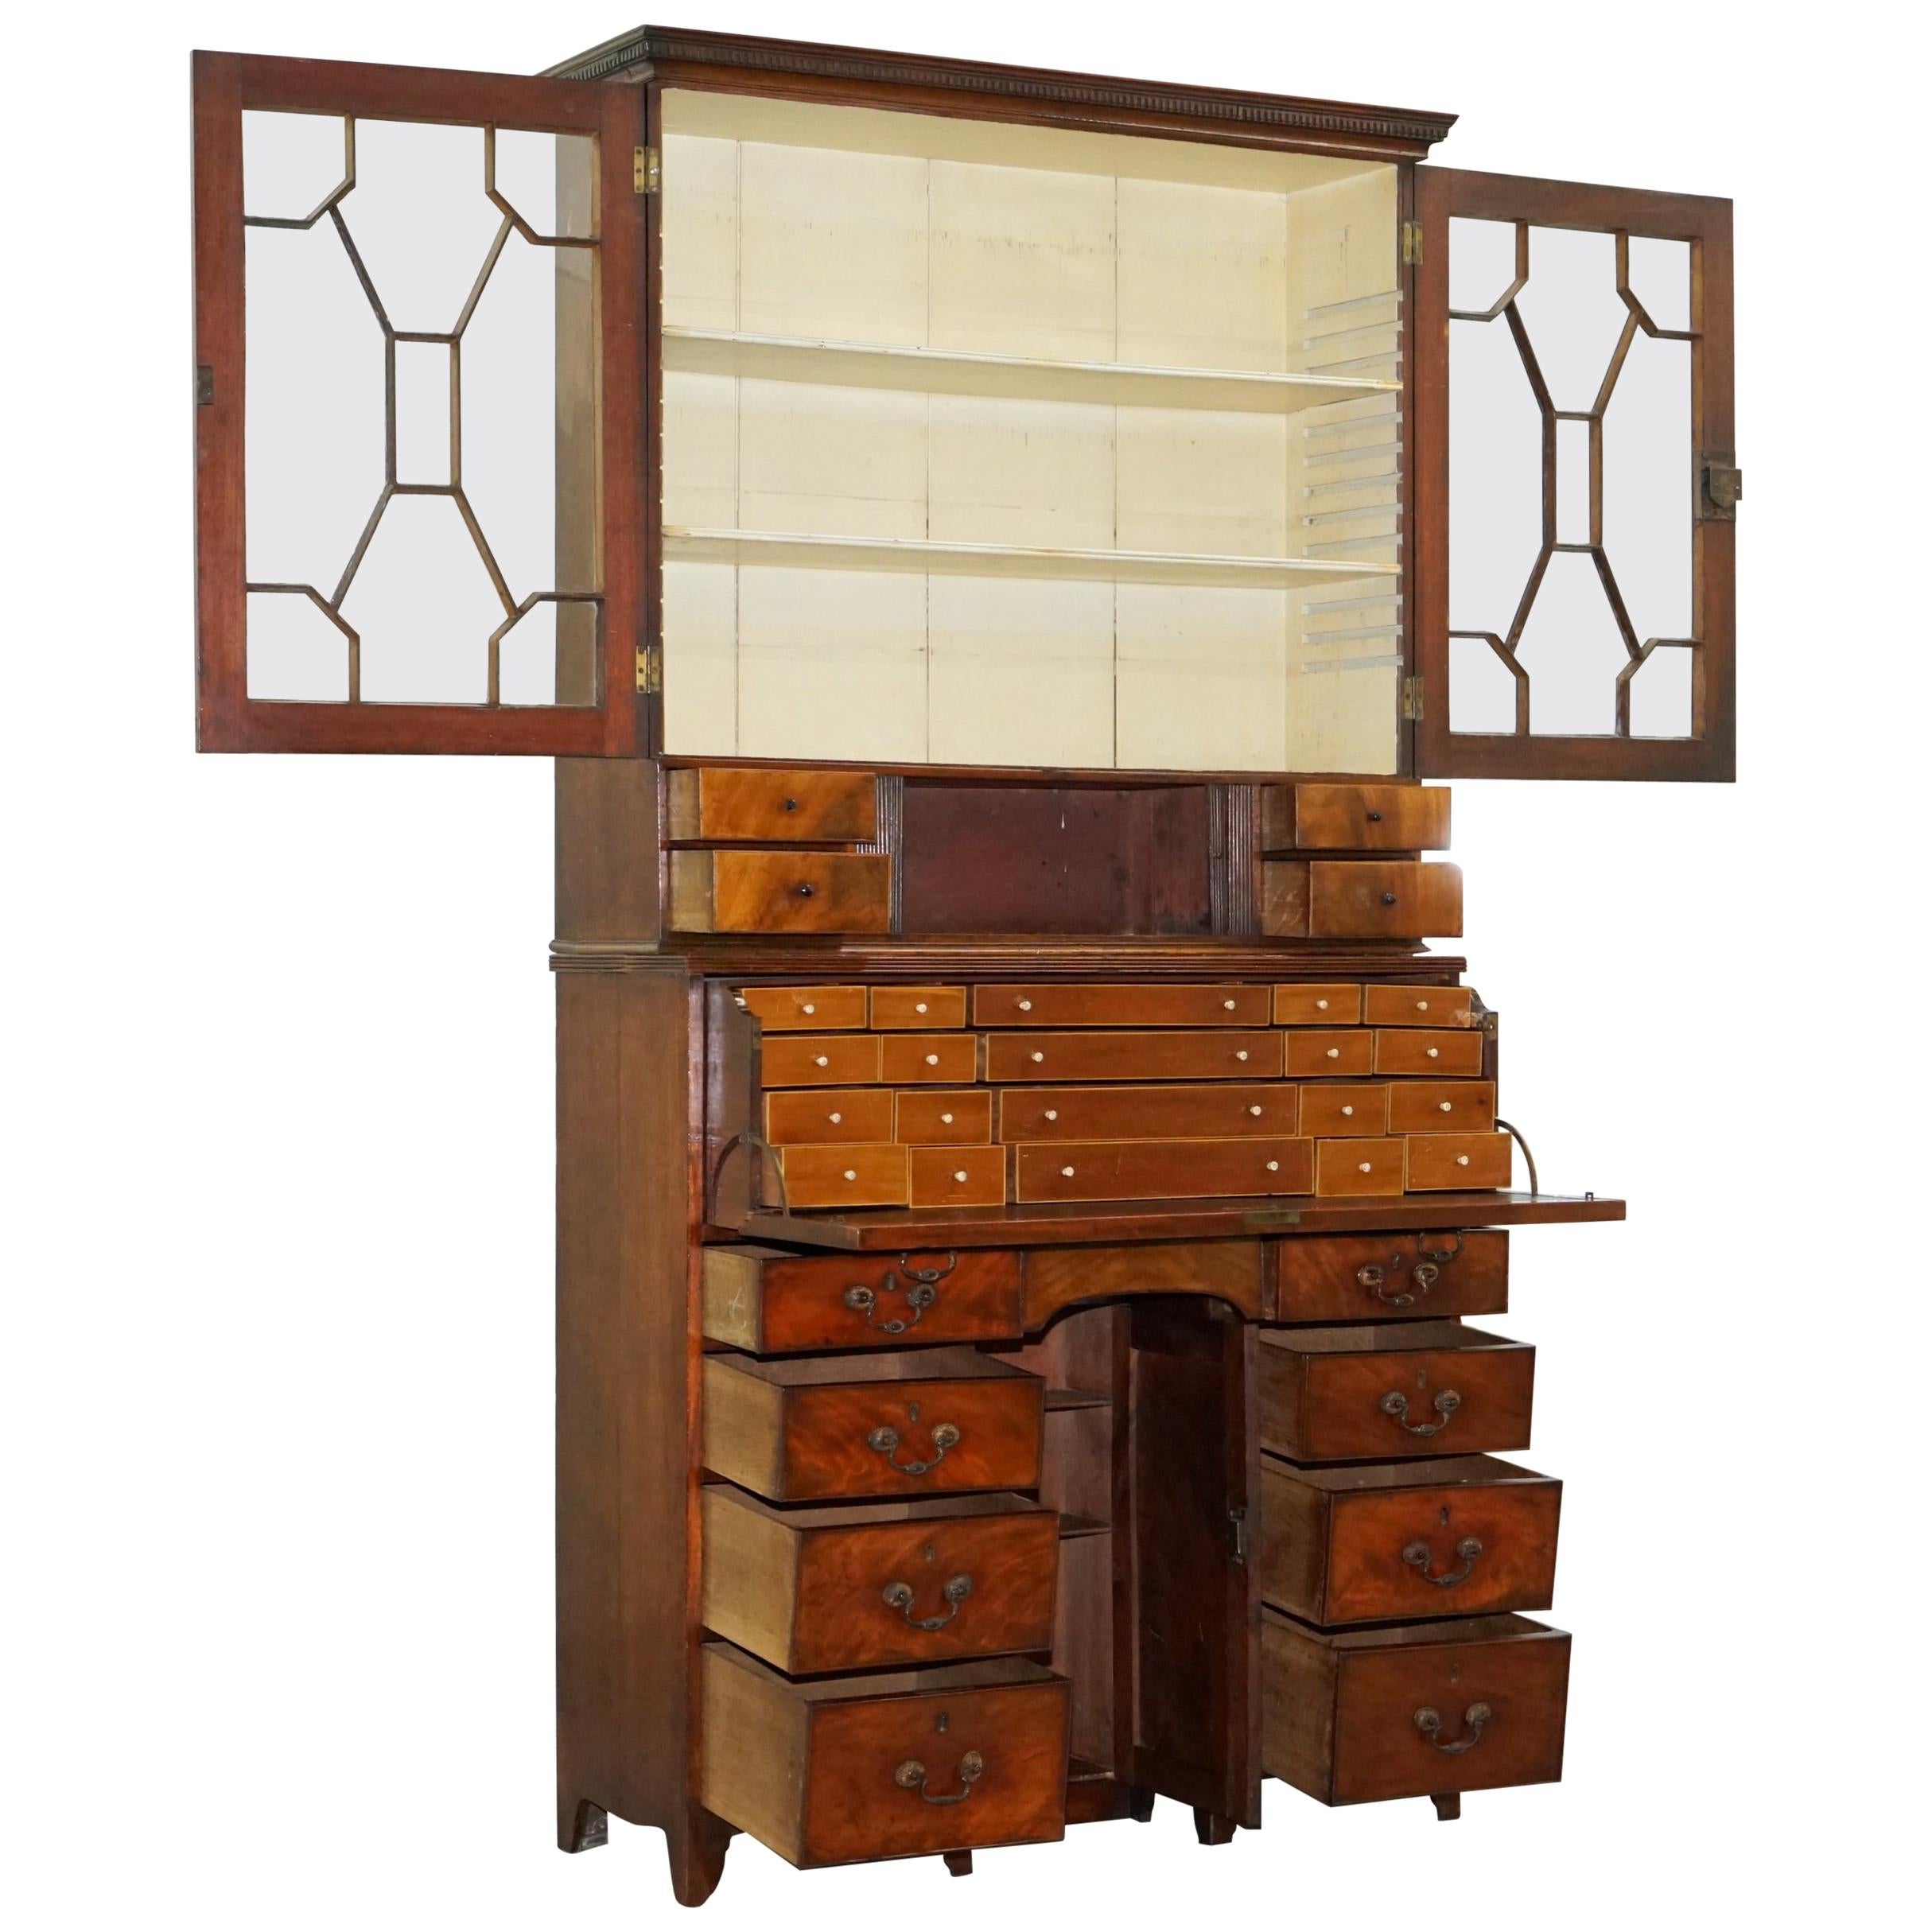 Rare 33 Drawer circa 1780 George III Mahogany Secretaire Bookcase Desk Bureau